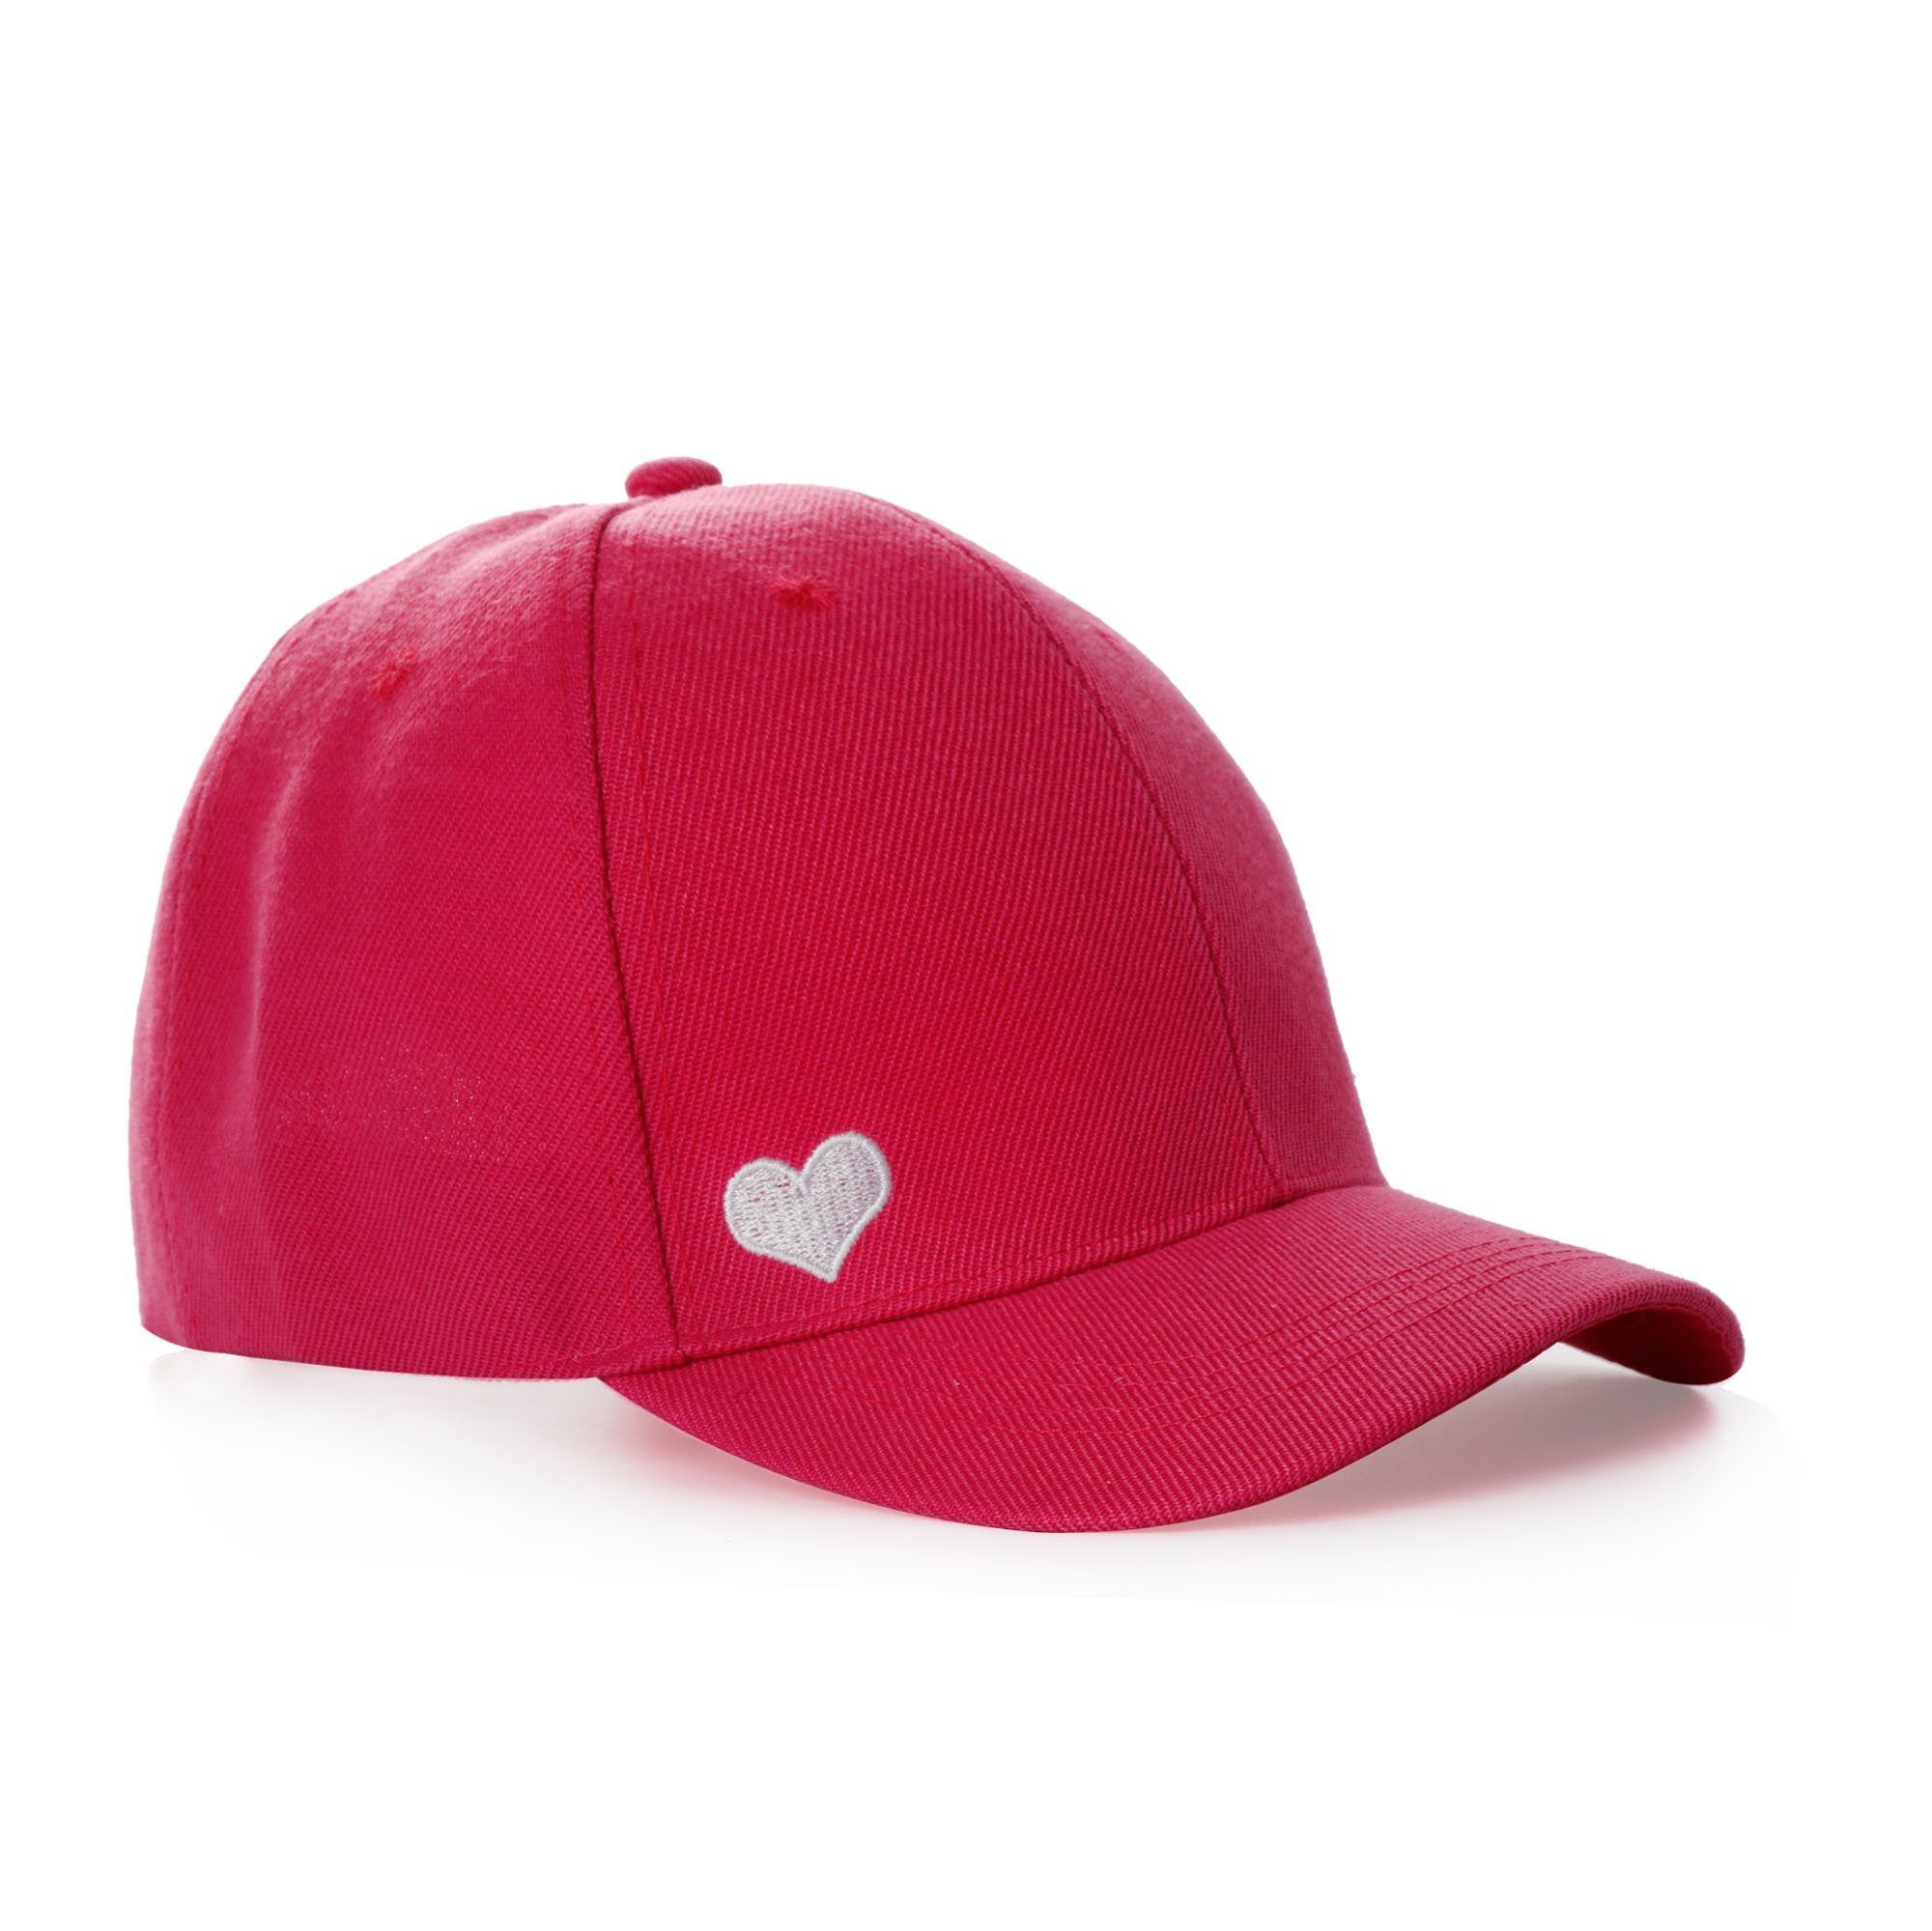 Sonia Originelli Baseball Cap Baseball Cap "Herz" Mütze Snapback Unisex pink